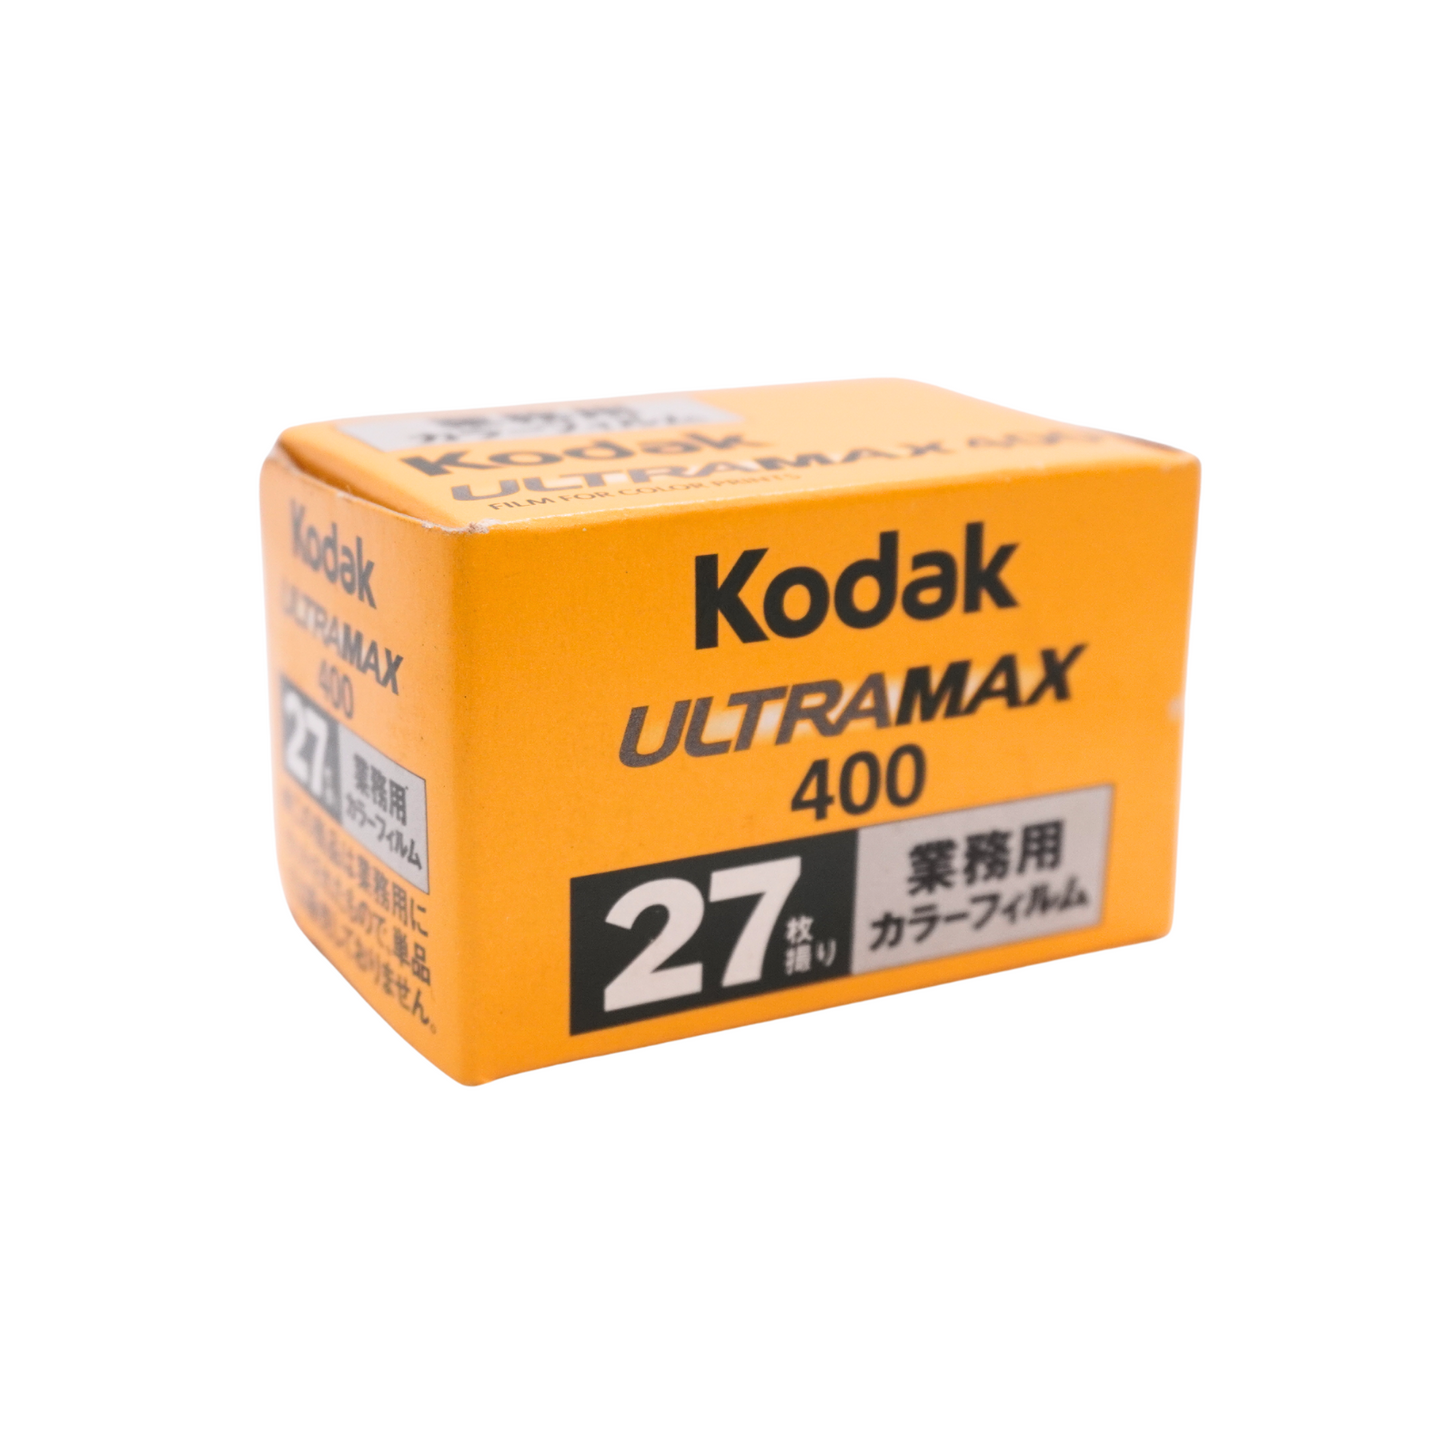 Kodak Industrial Ultramax 400 27exp 35mm Color Expired Film (2009/10)